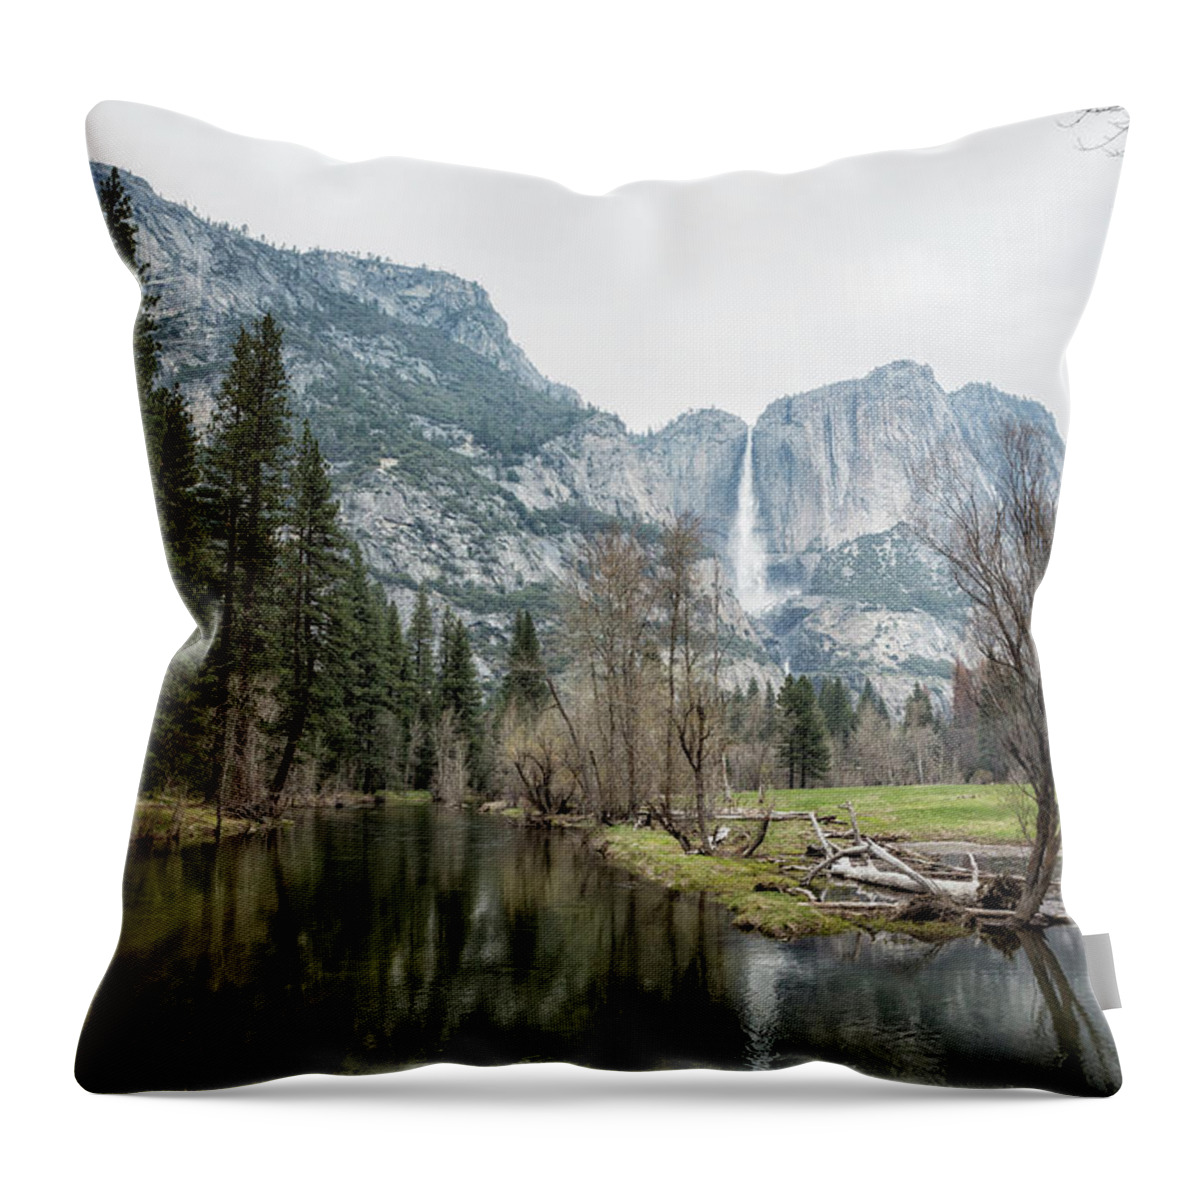 Yosemite Falls Throw Pillow featuring the photograph Yosemite Falls by Belinda Greb